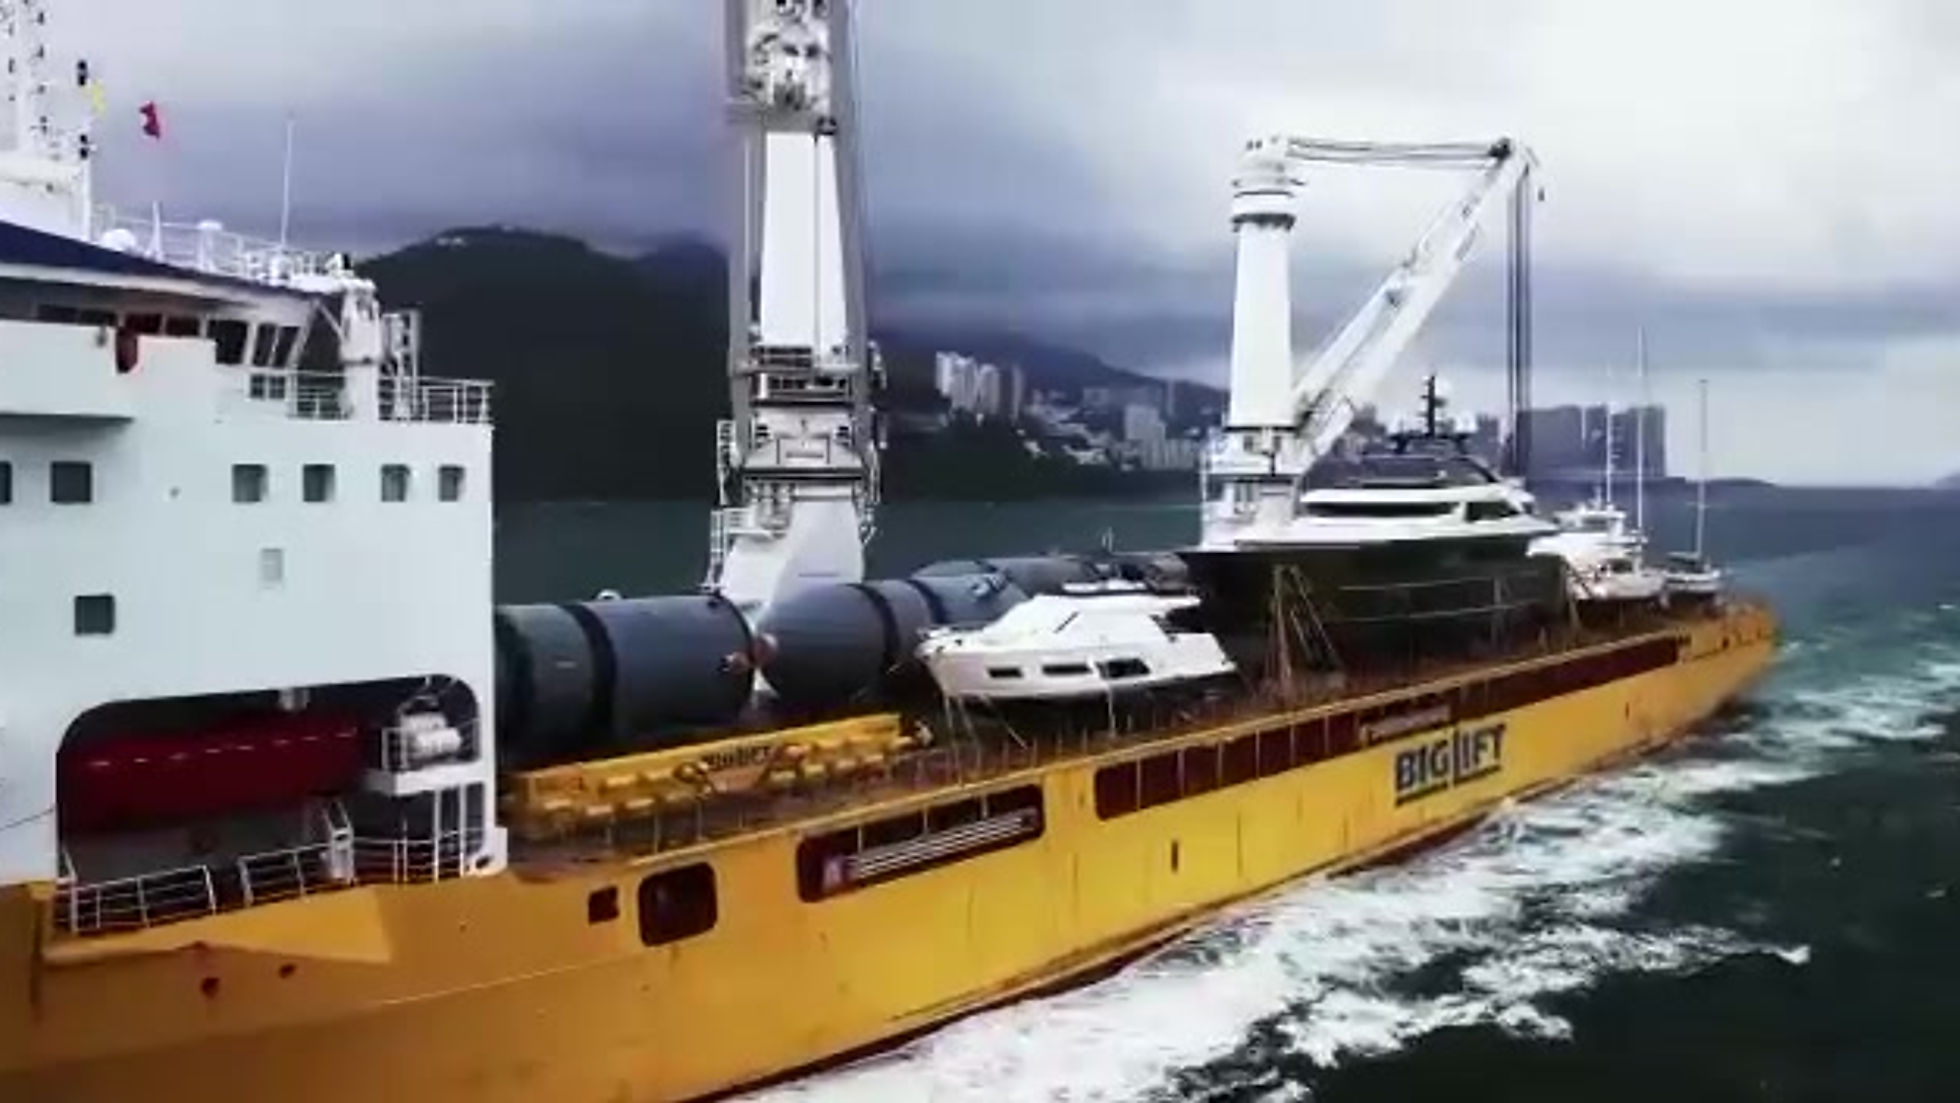 HK Maritime Industry